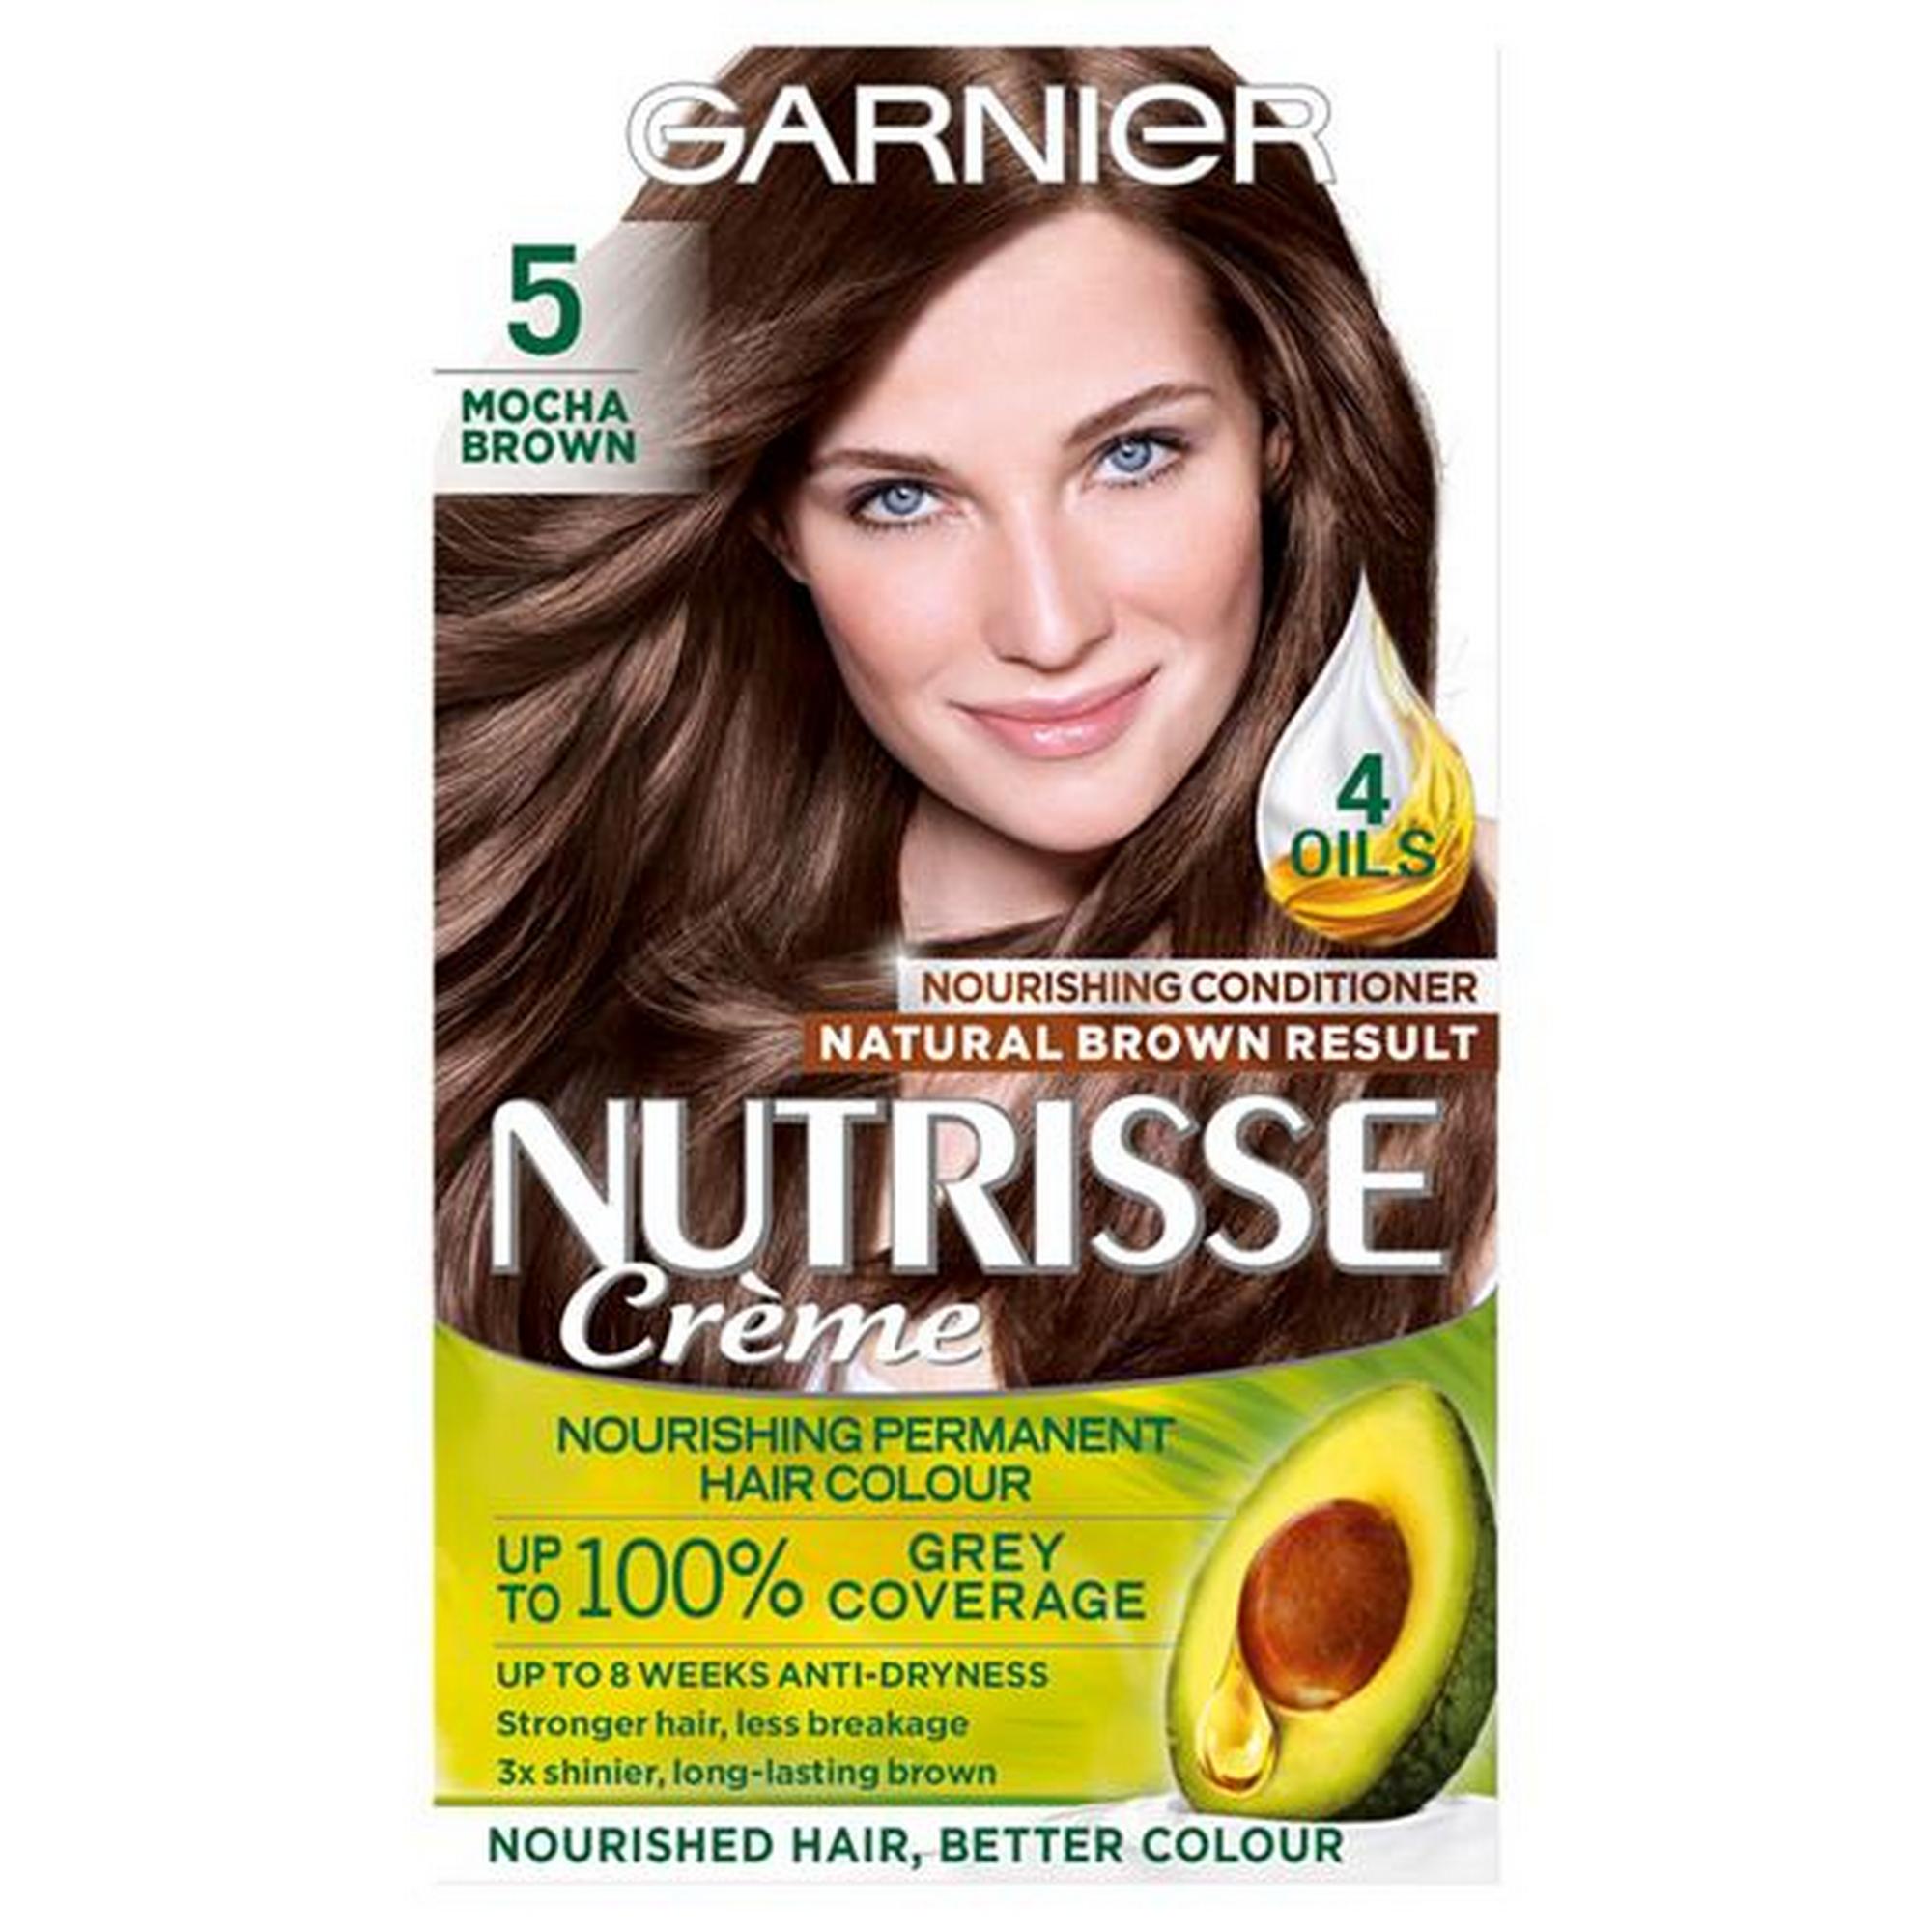 Garnier Nutrisse Ultra Crème Permanent Hair Dye Mocha Brown